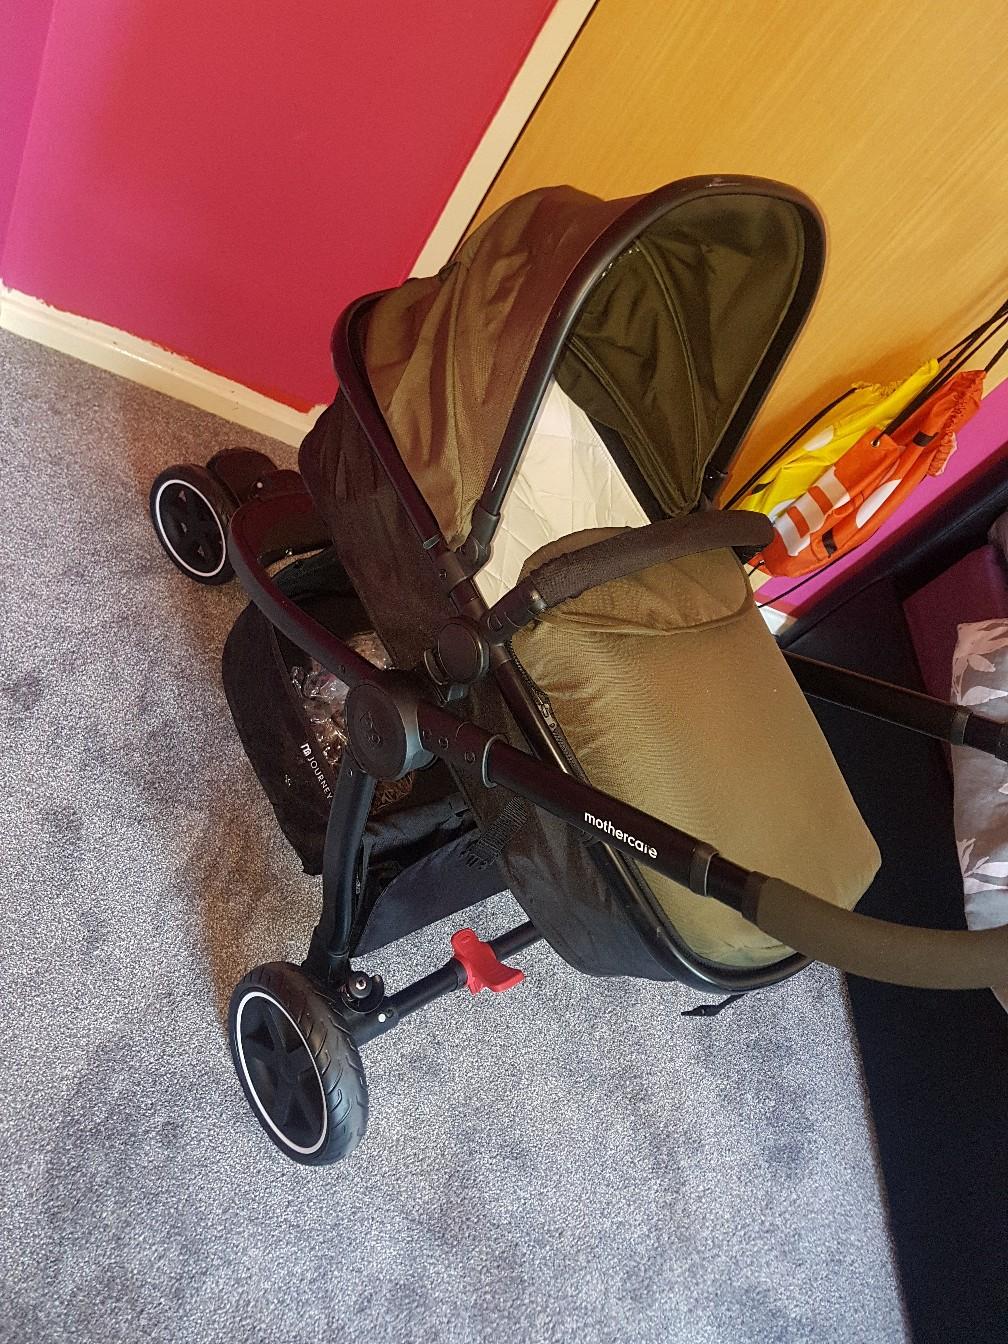 mothercare journey khaki 4 wheel